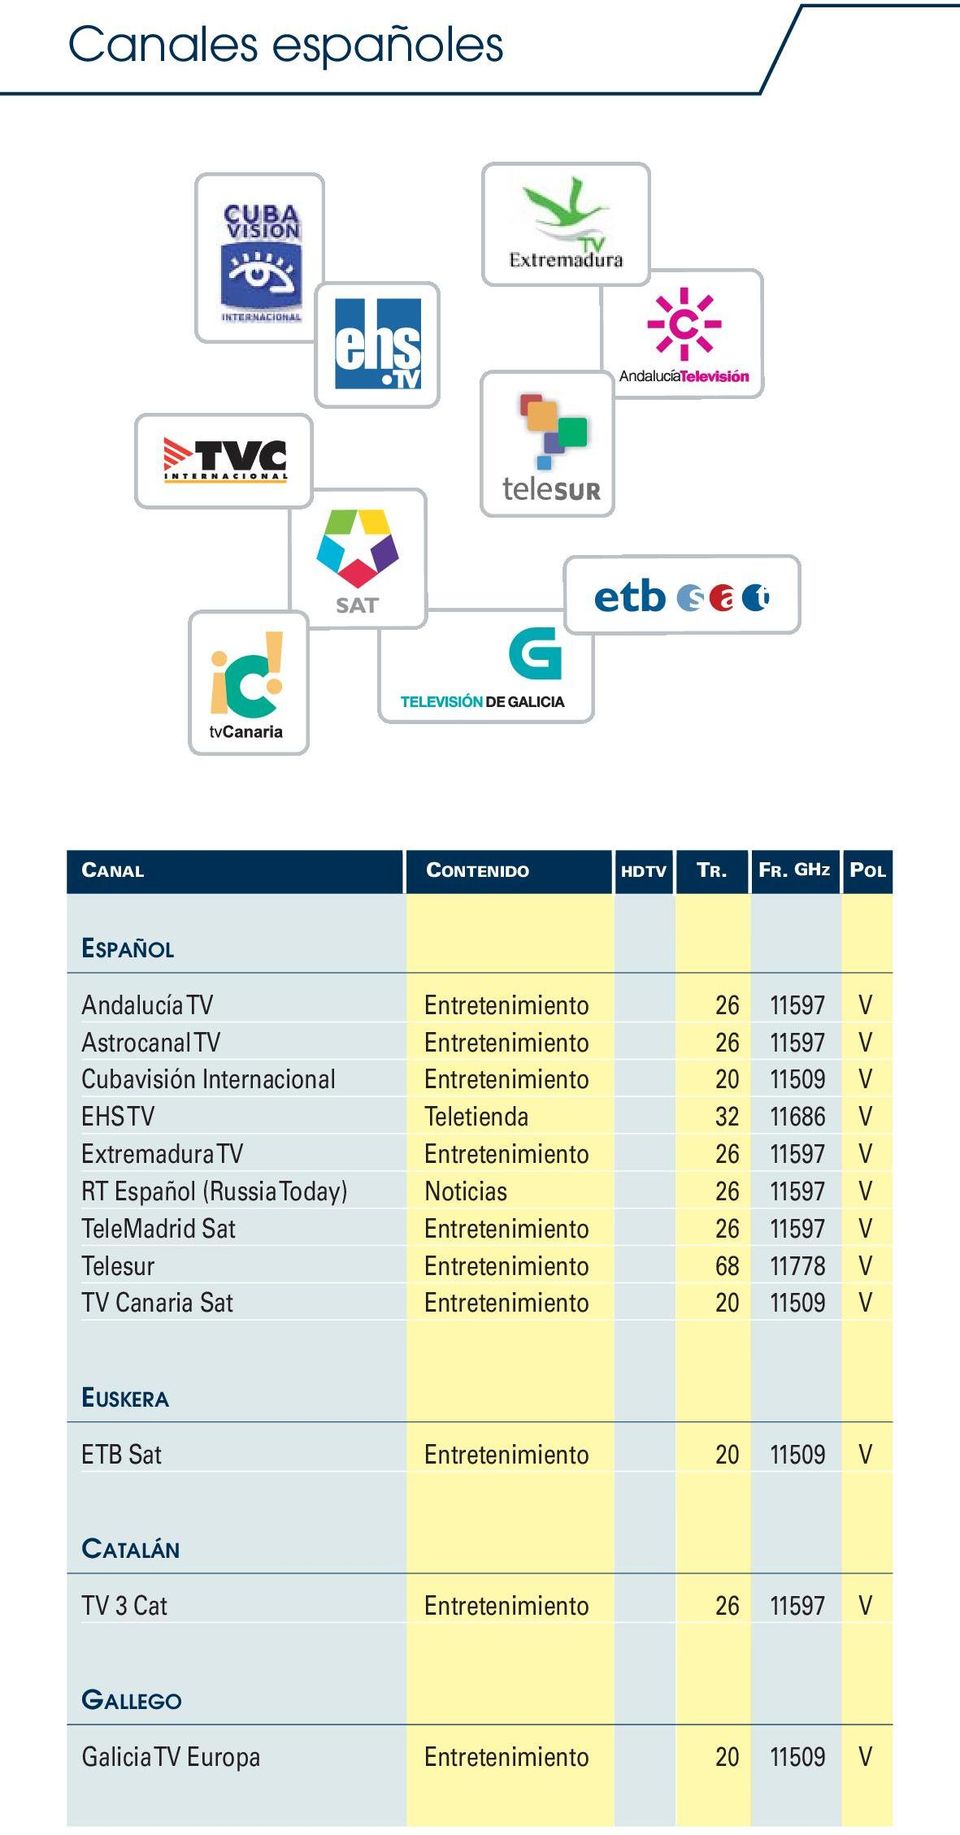 11509 V EHS TV Teletienda 32 11686 V Extremadura TV Entretenimiento 26 11597 V RT Español (Russia Today) Noticias 26 11597 V TeleMadrid Sat